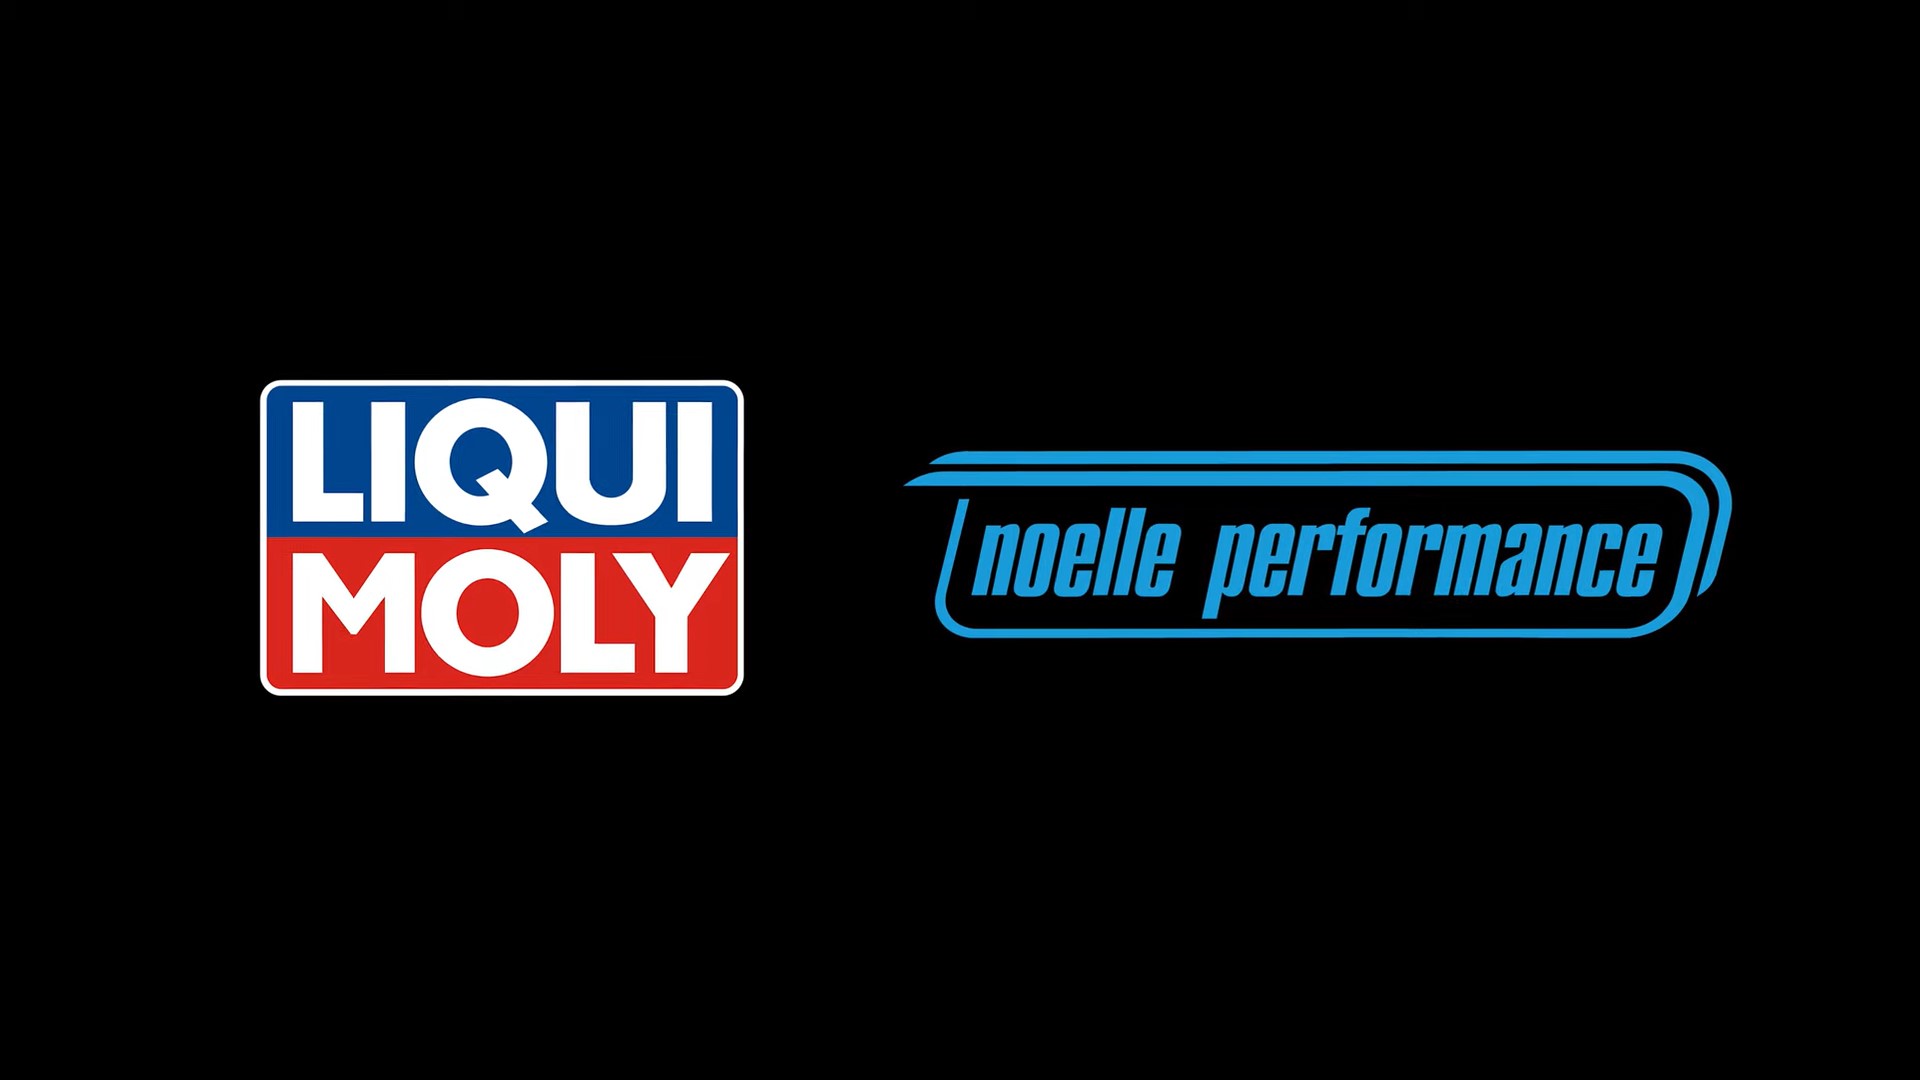 LIQUI MOLY, Noelle Performance Form Technical Partnership | THE SHOP